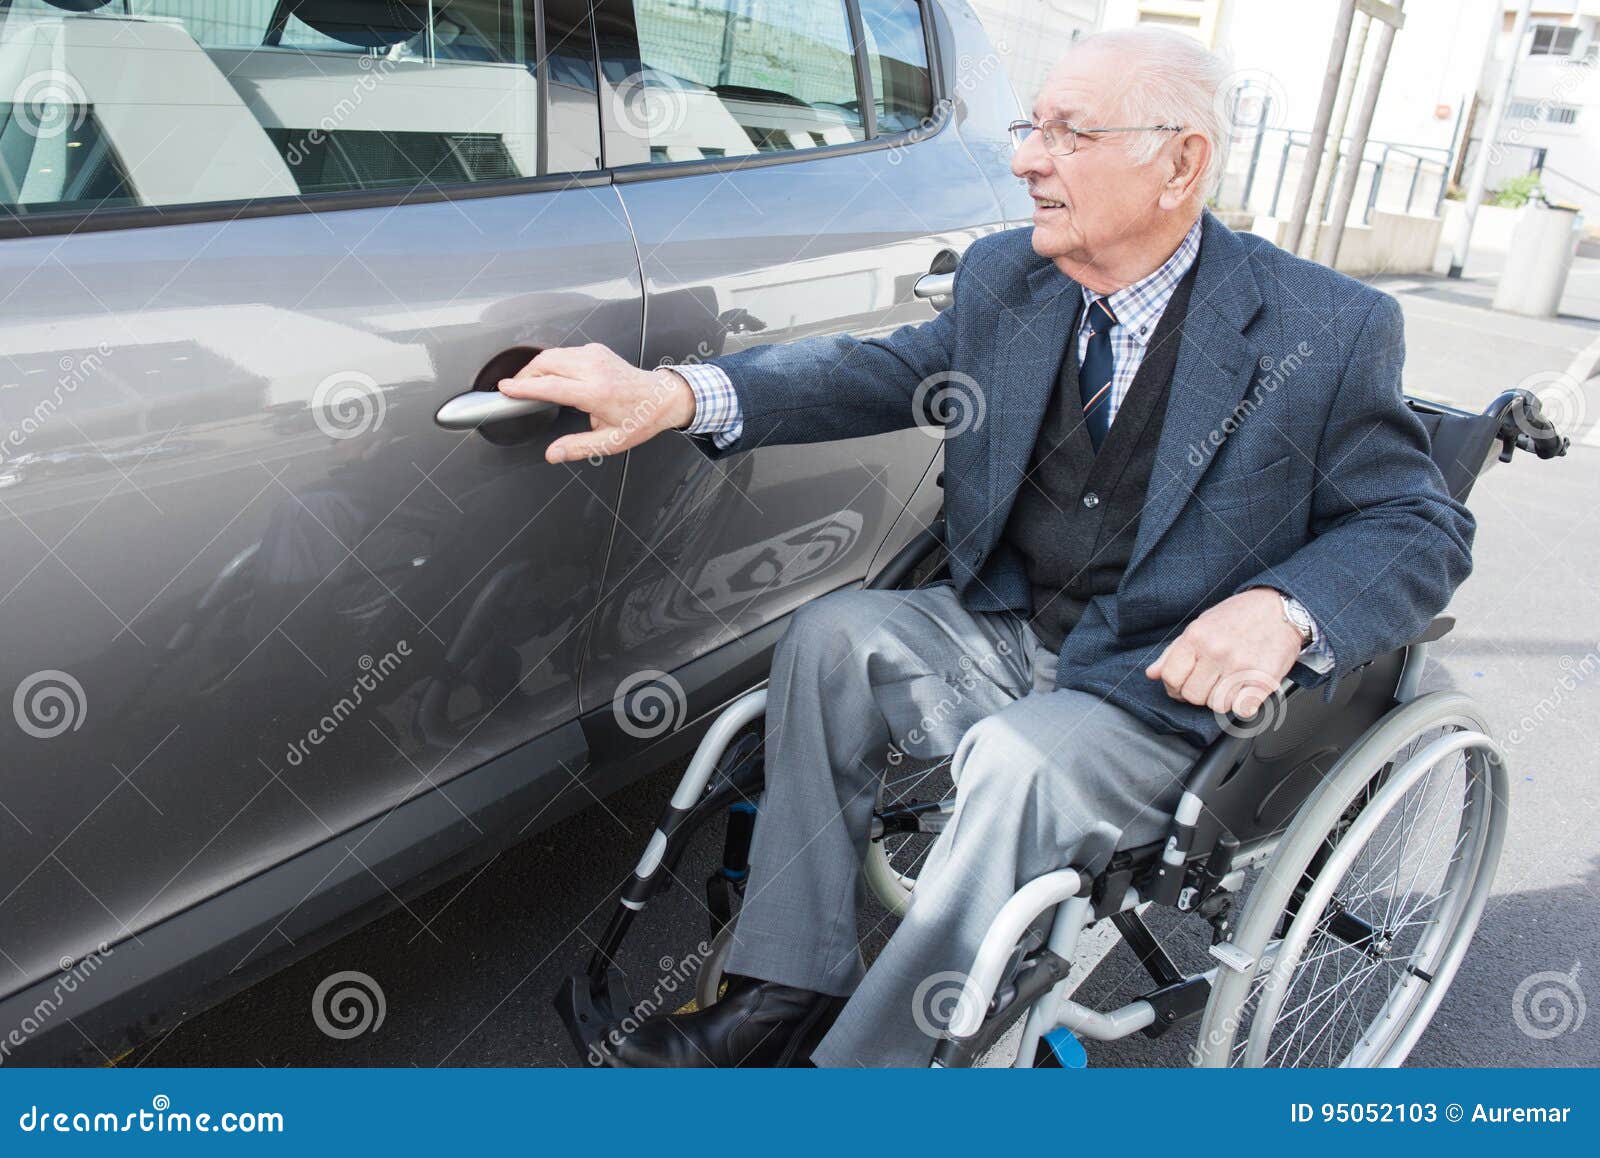 old-man-wheelchair-next-to-car-his-95052103.jpg